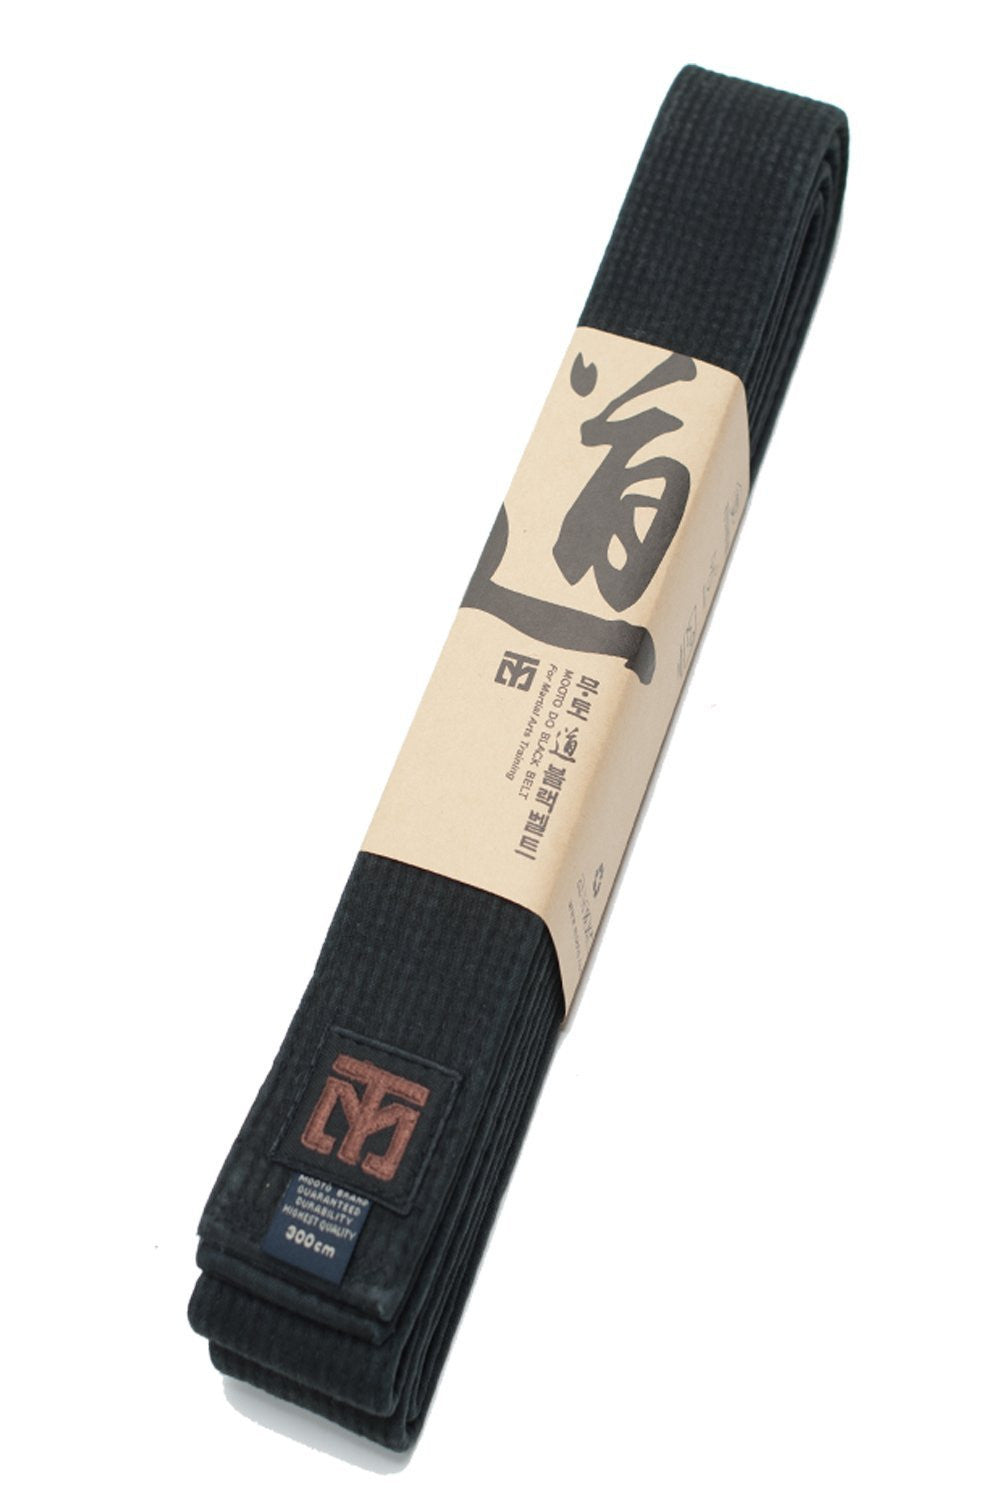 Mooto Taekwondo BLACK BELT - SparringGearSet.com - 1